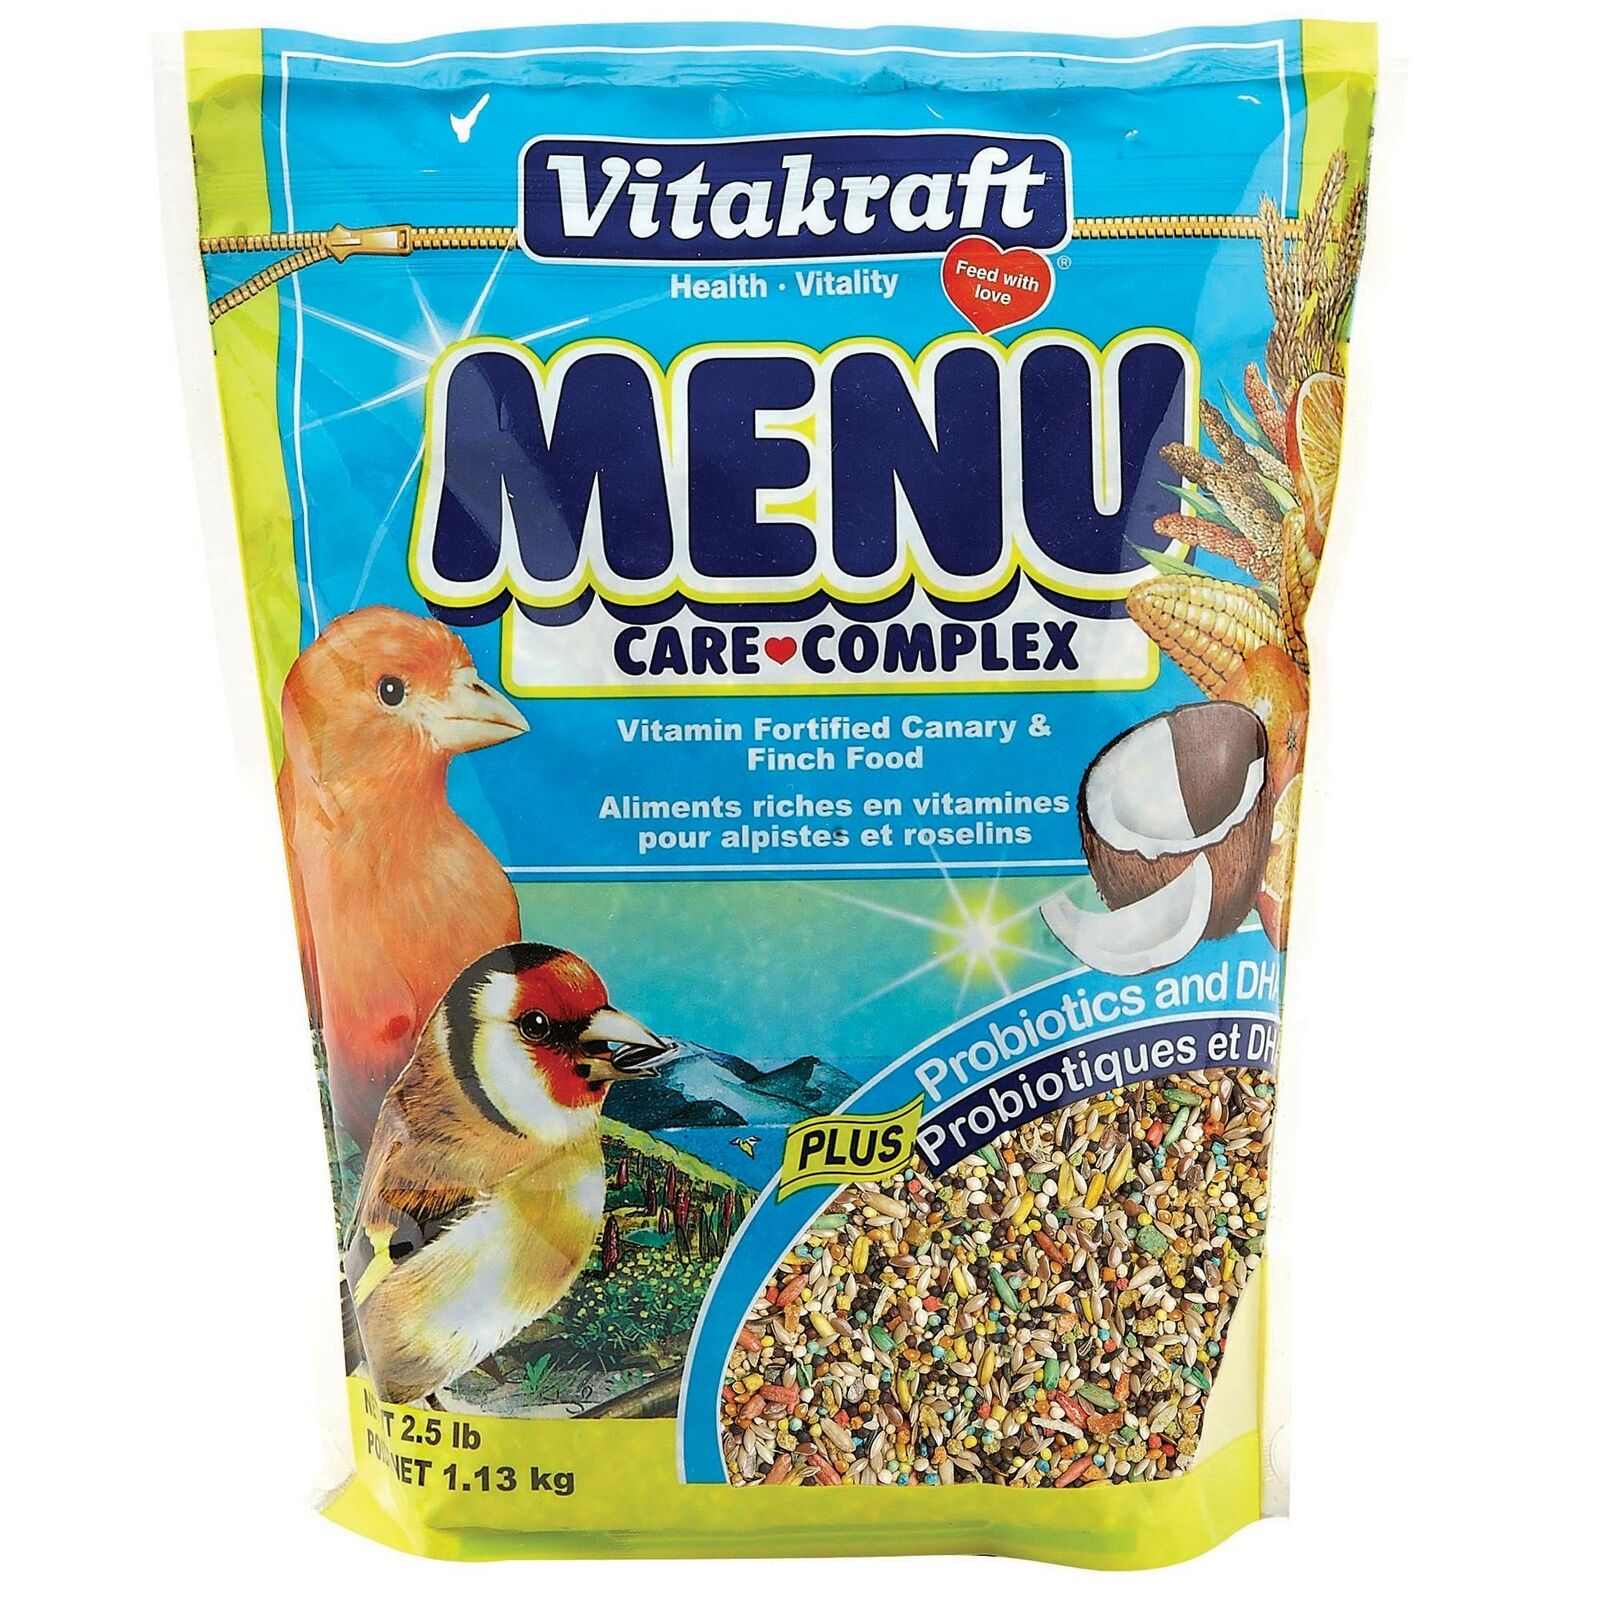 Vitakraft Menu Vitamin Fortified Canary & Finch Food, 2.5 Lb.